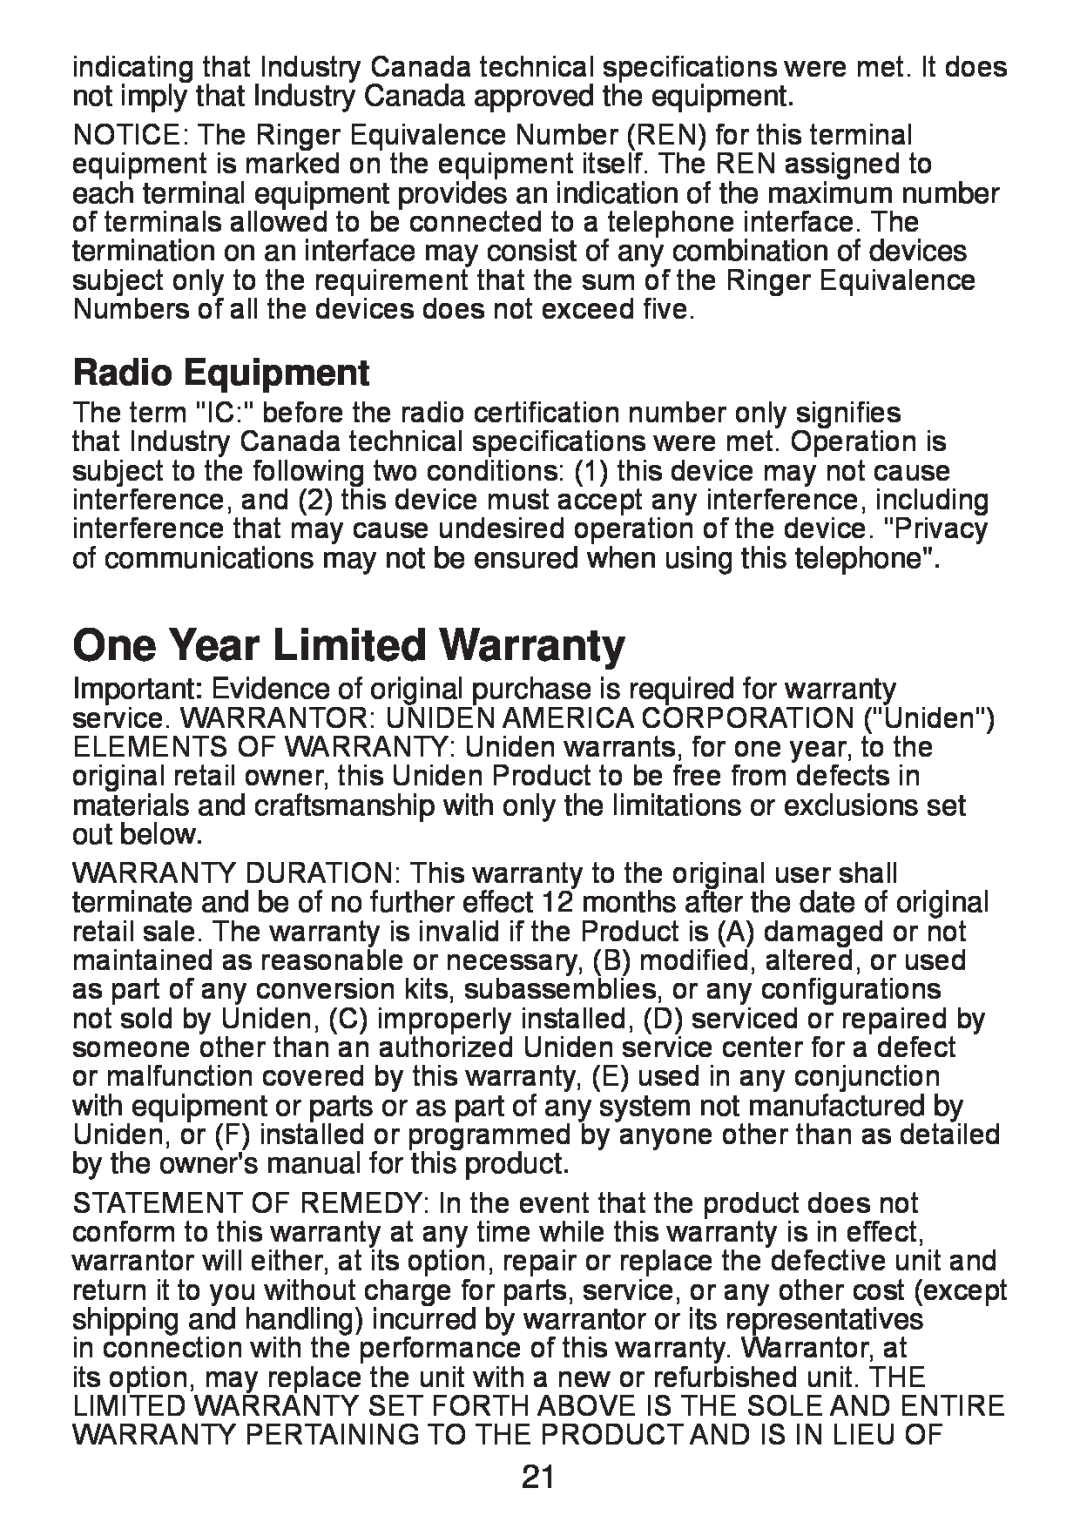 Uniden DWX207 manual One Year Limited Warranty, Radio Equipment 